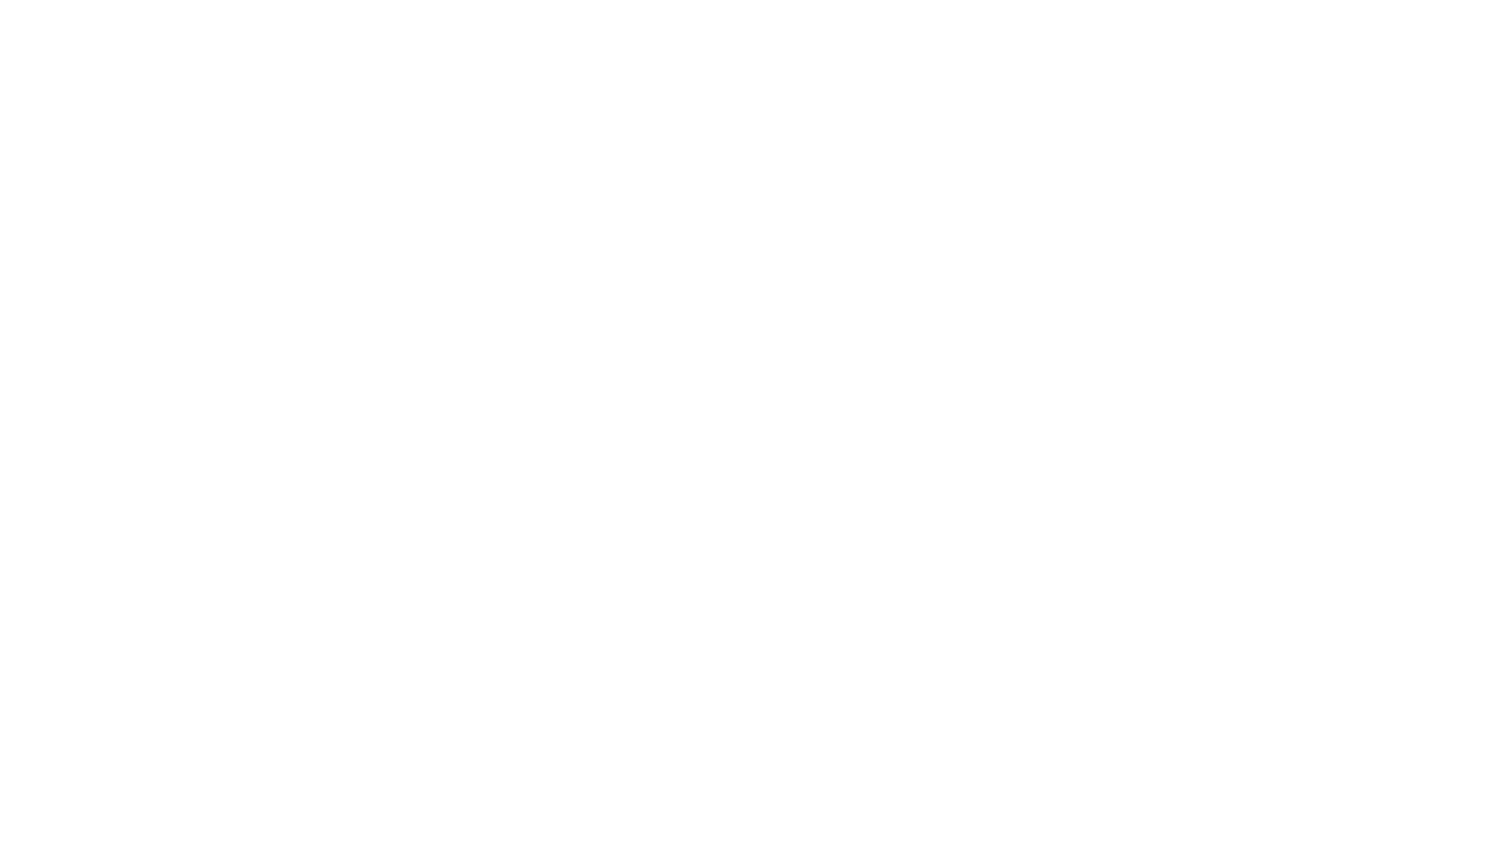 Boudoirfotografin